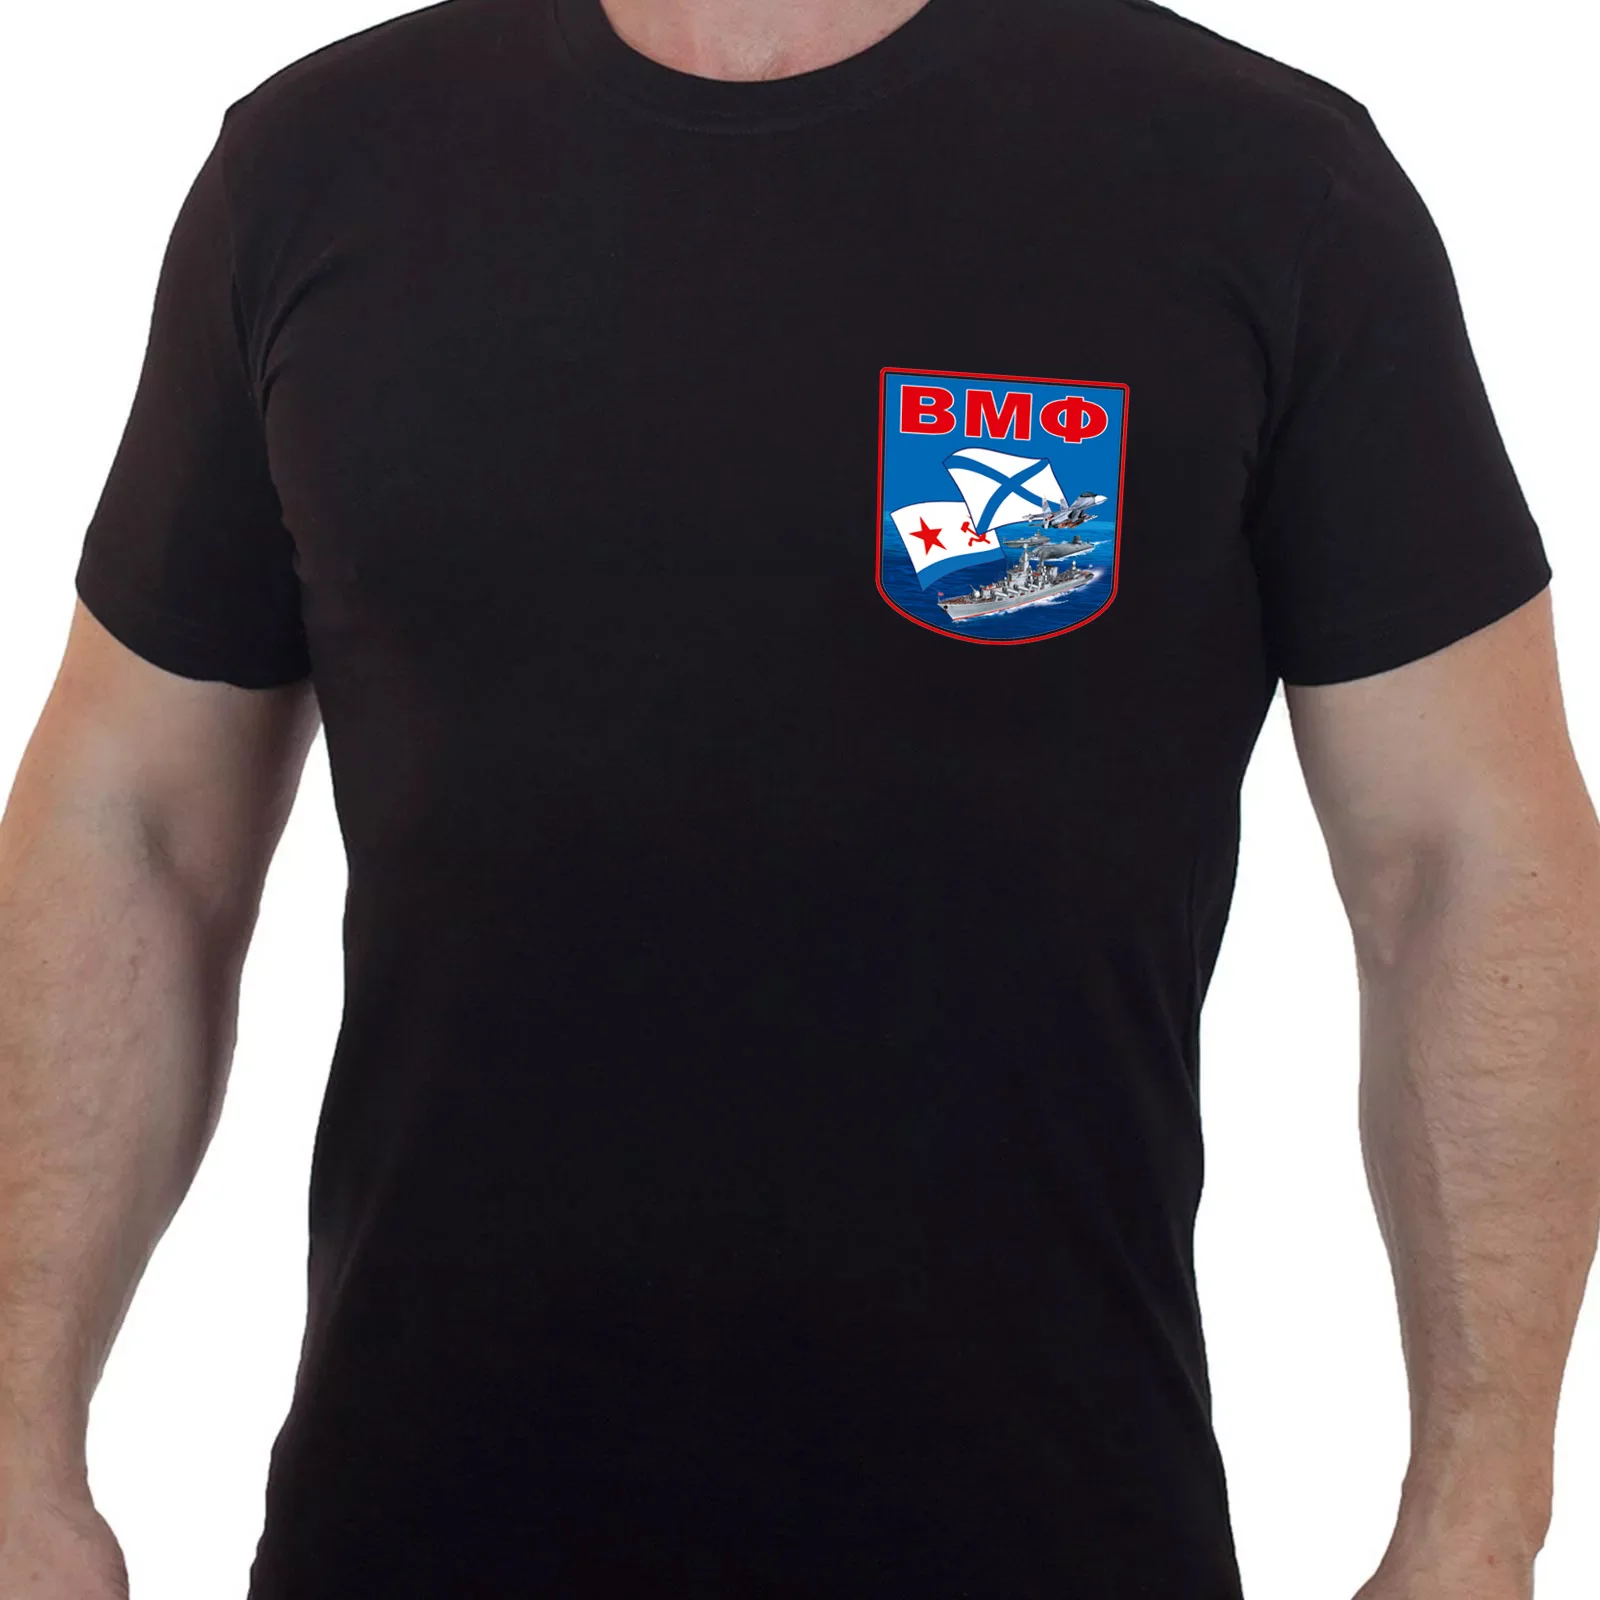 

ВМФ Russian Navy Fleet T Shirt. 100% Cotton Short Sleeve O-Neck Casual T-shirt Loose Top Size S-3XL